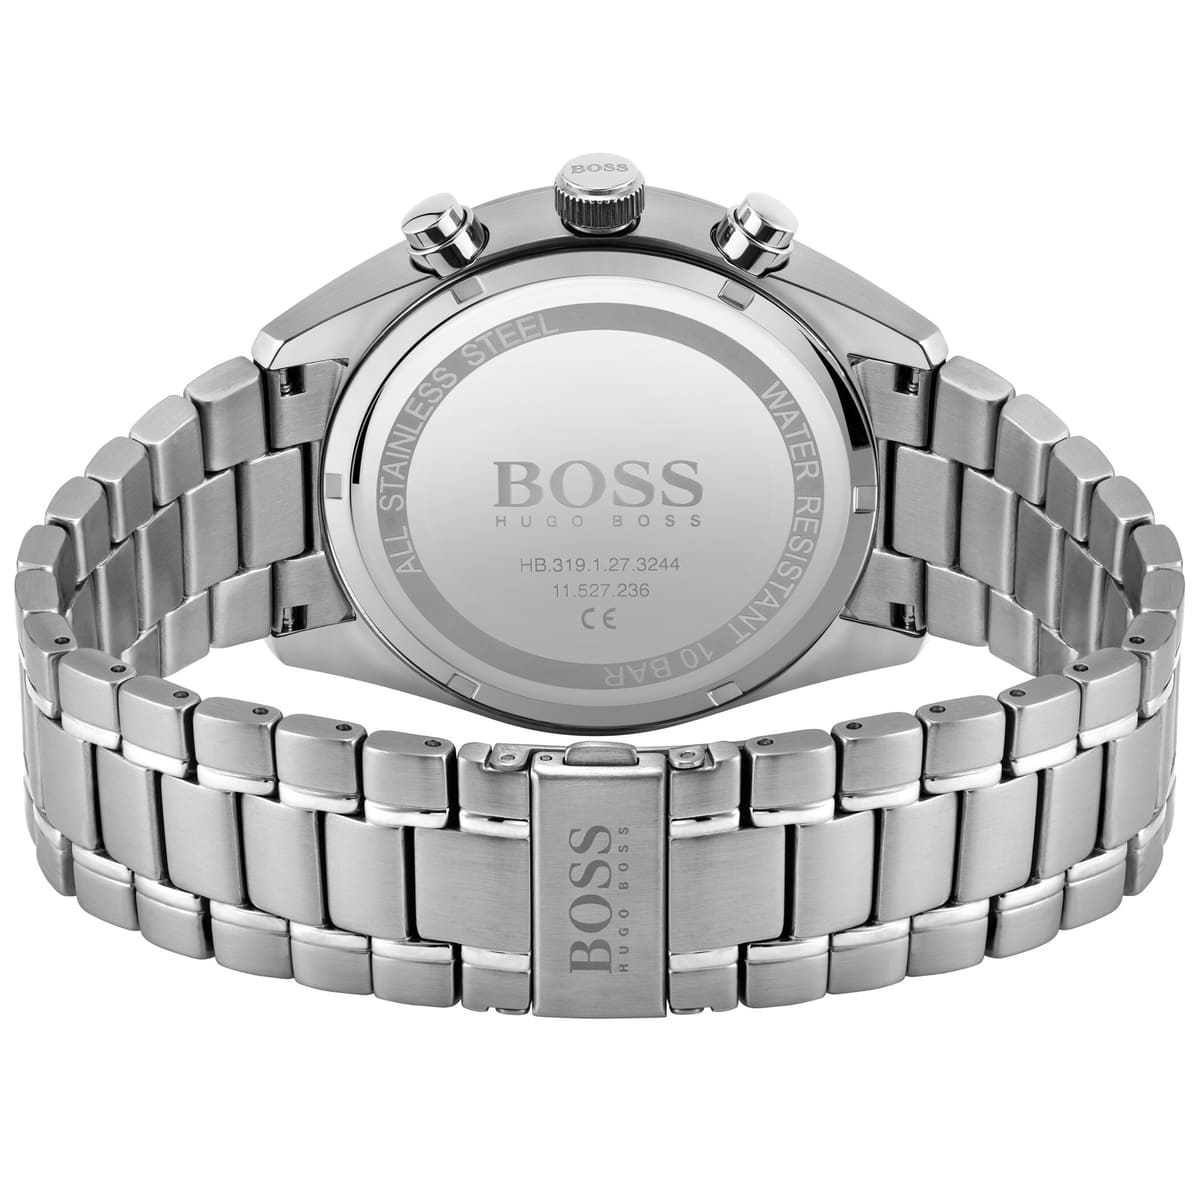 Hugo Boss Champion Blue Dial Silver Steel Strap Watch for Men - 1513818